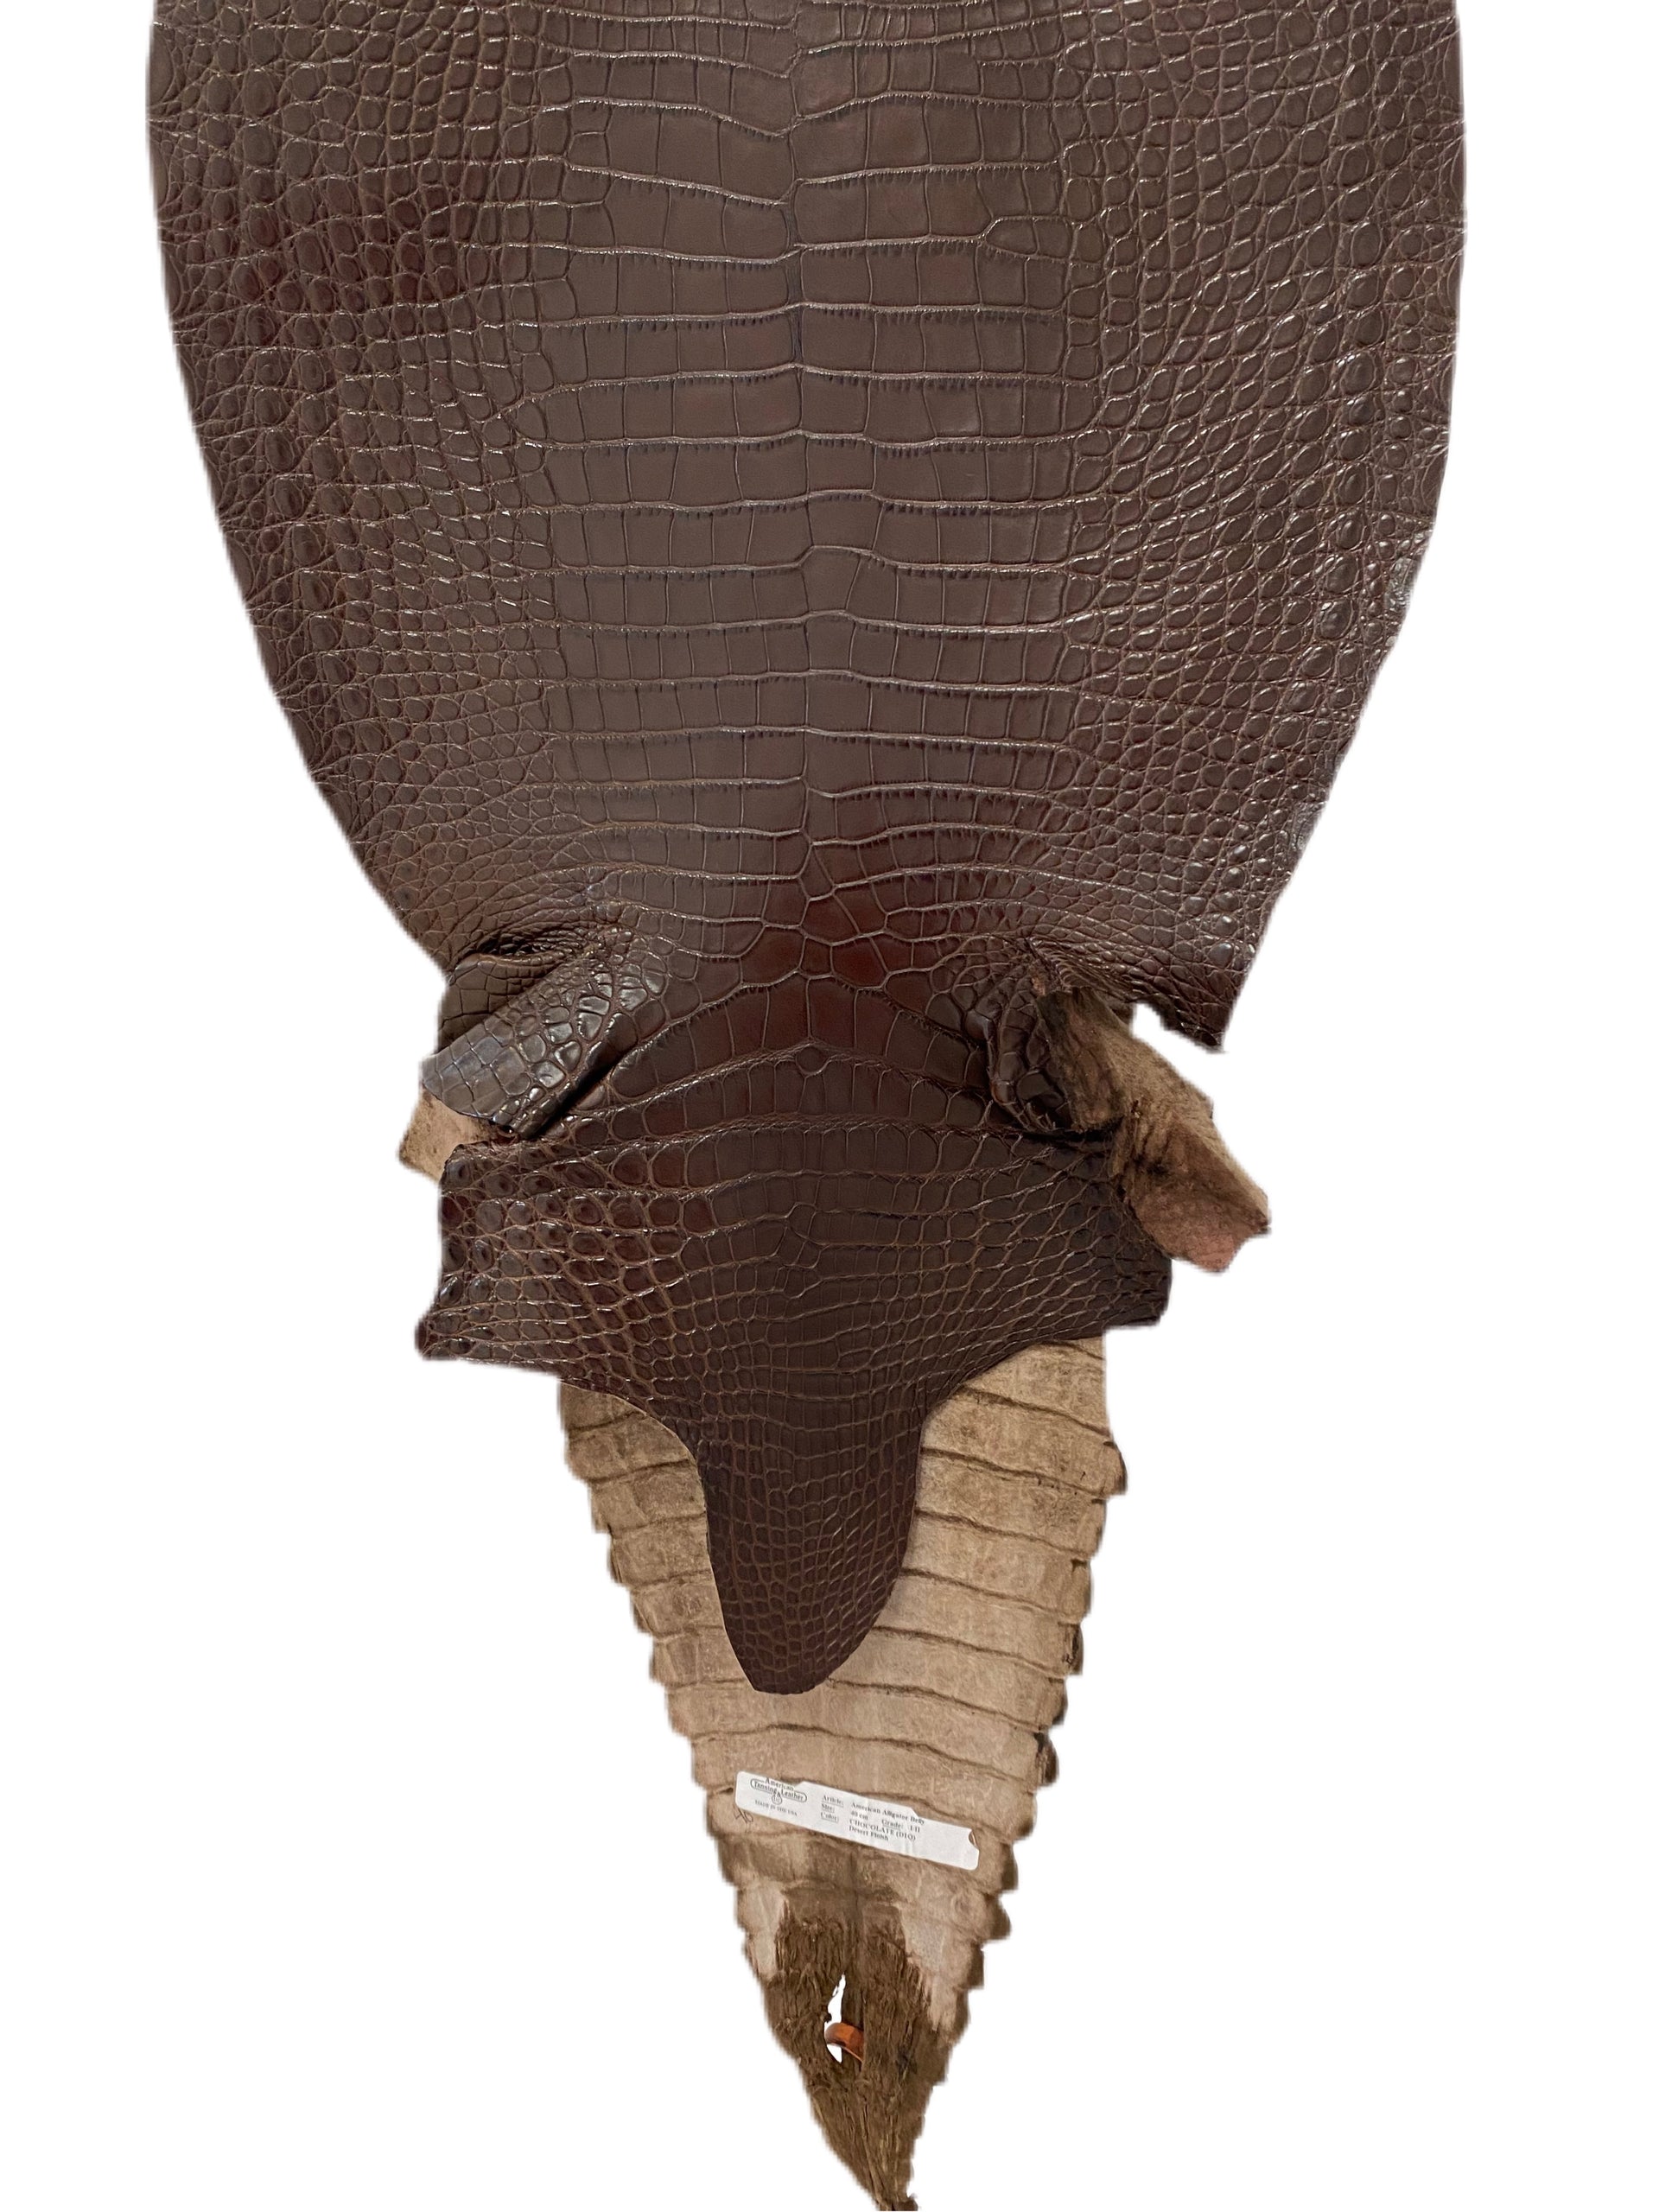 40 Cm Grade 1/2 Chocolate Matte Farm Raised American Alligator Leather - Tag: FL17-0052627